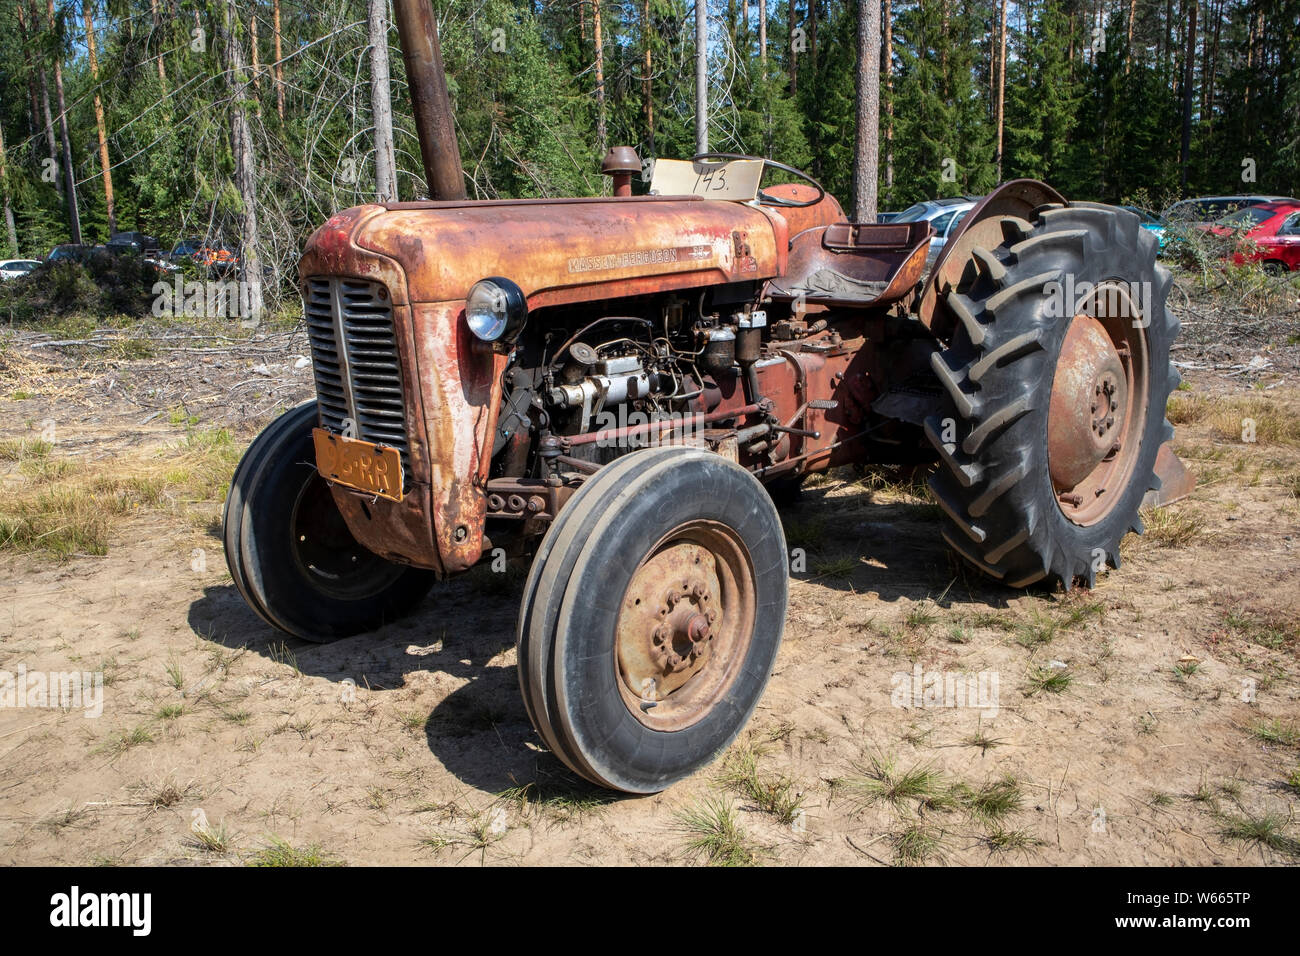 rusty old Massey-Ferguson tractor on display Stock Photo